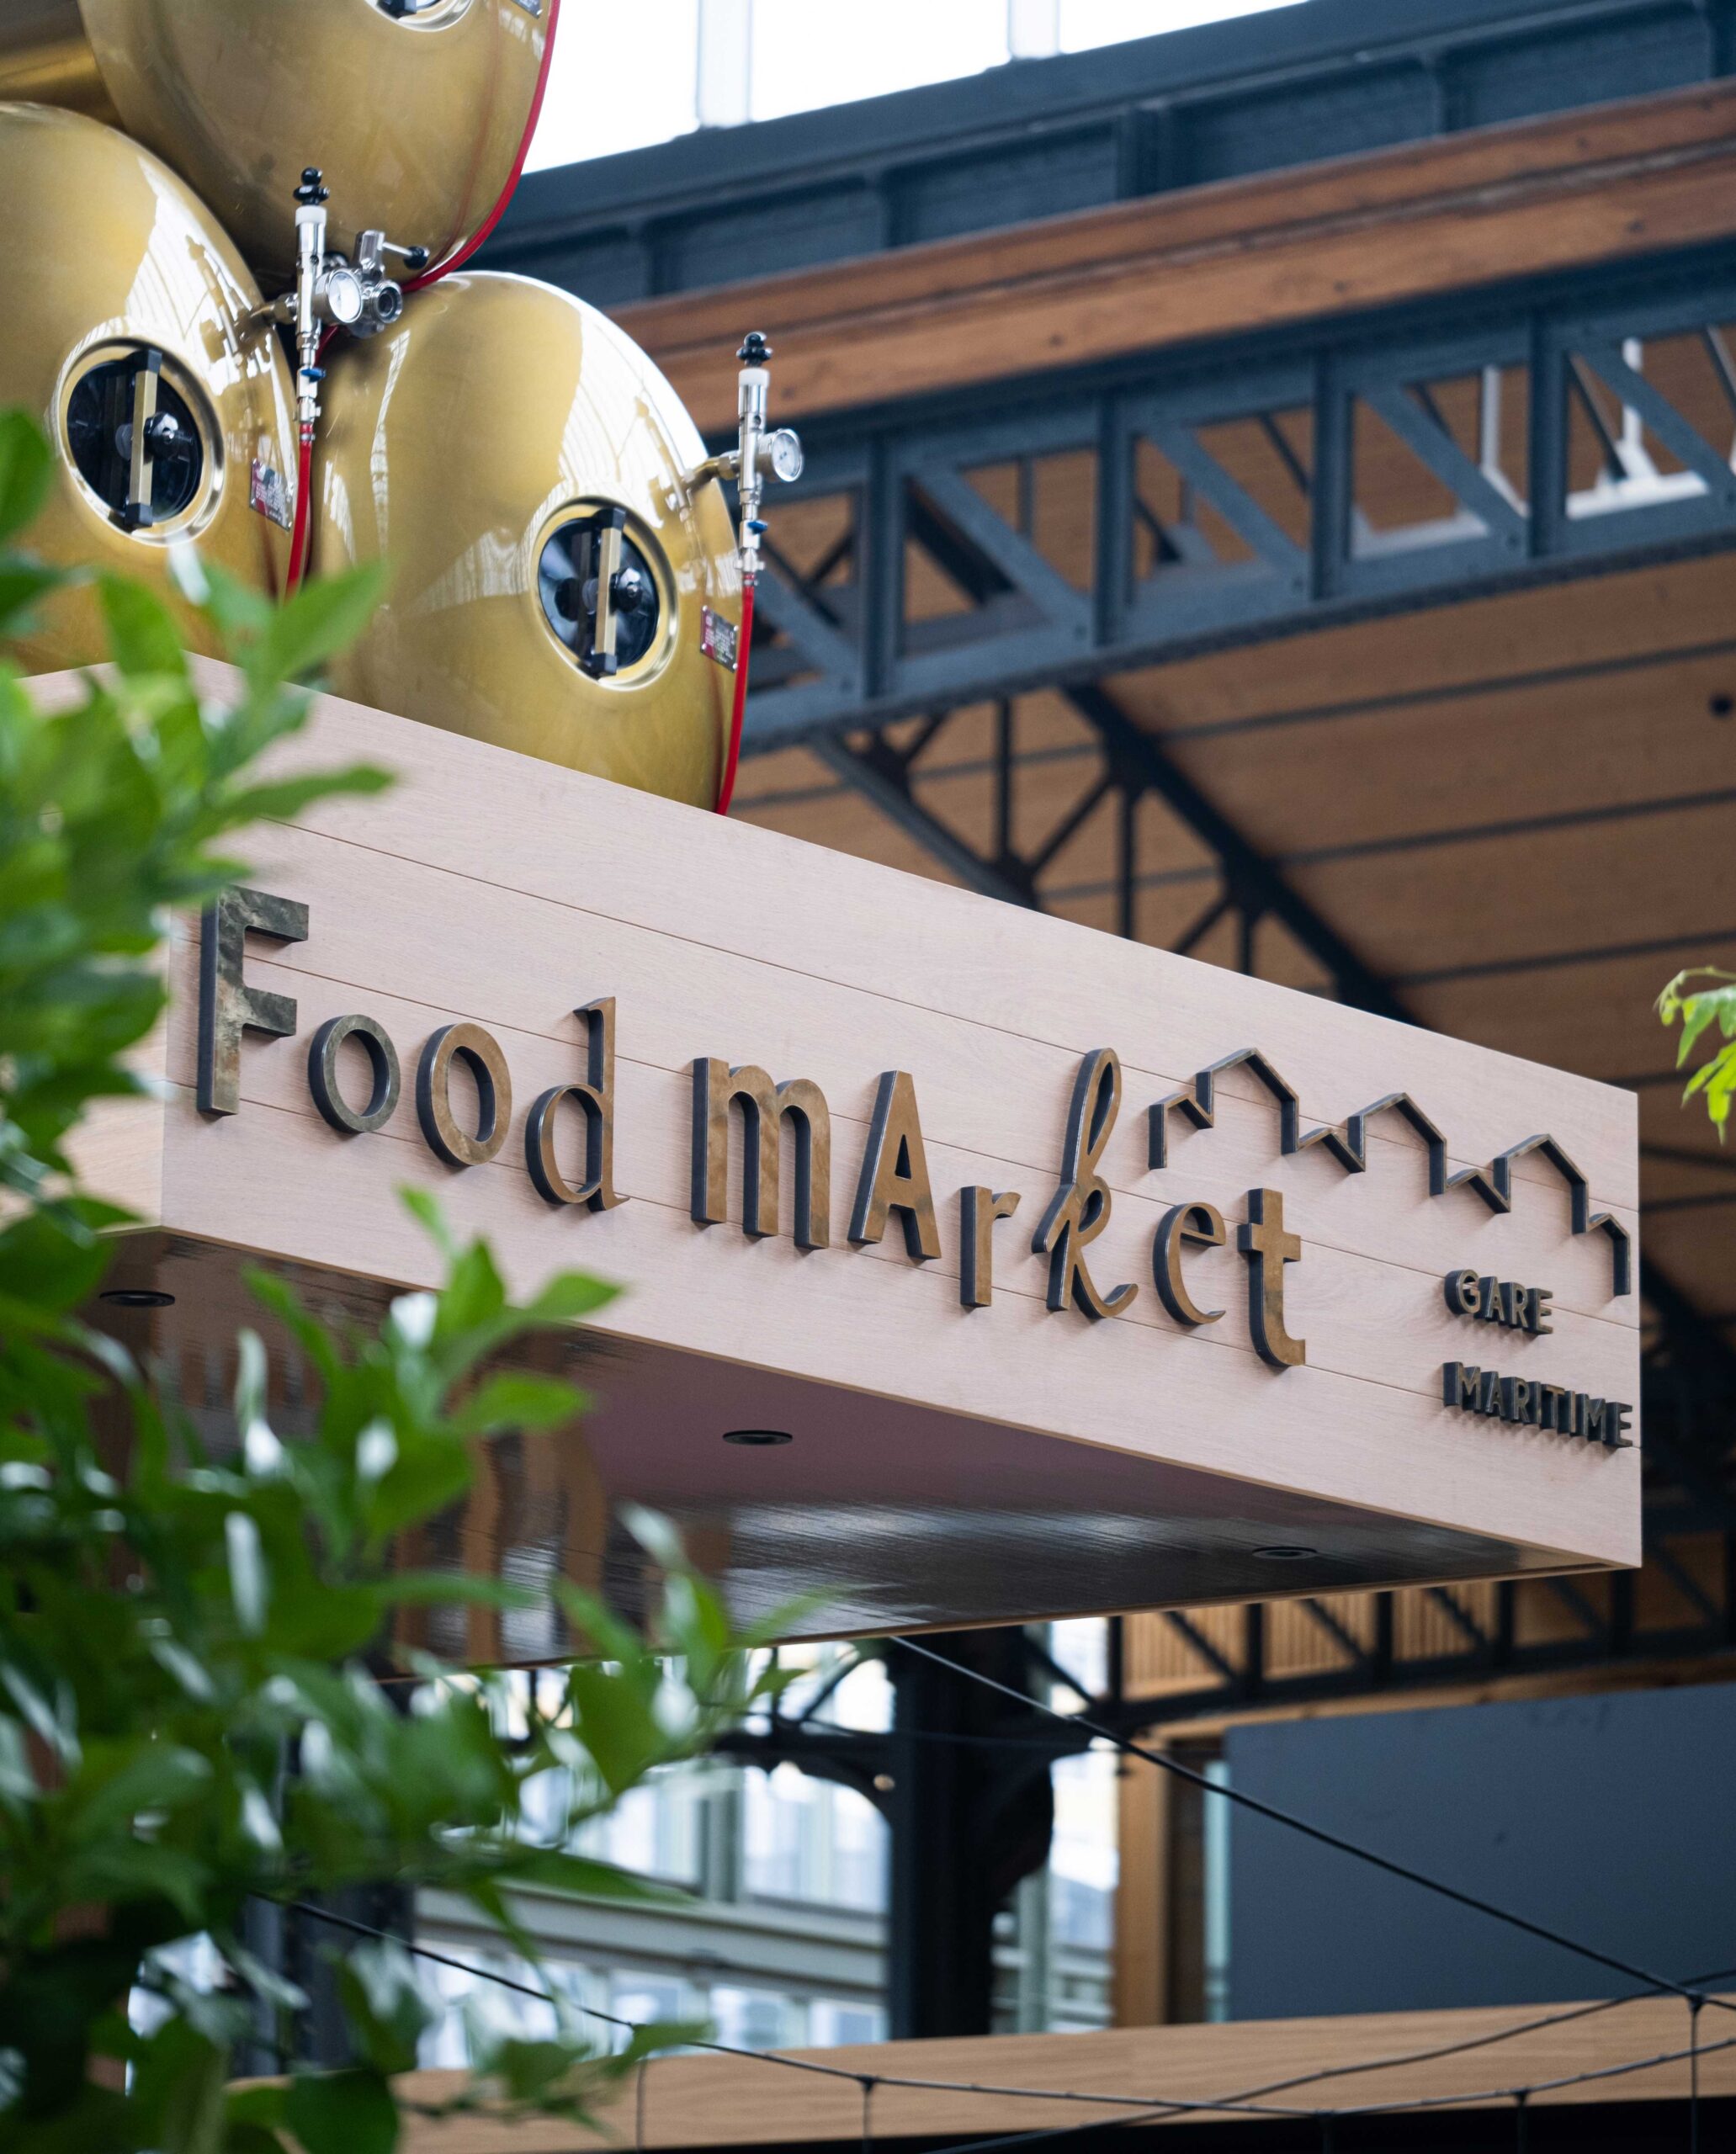 Foodmarket Gare Maritime